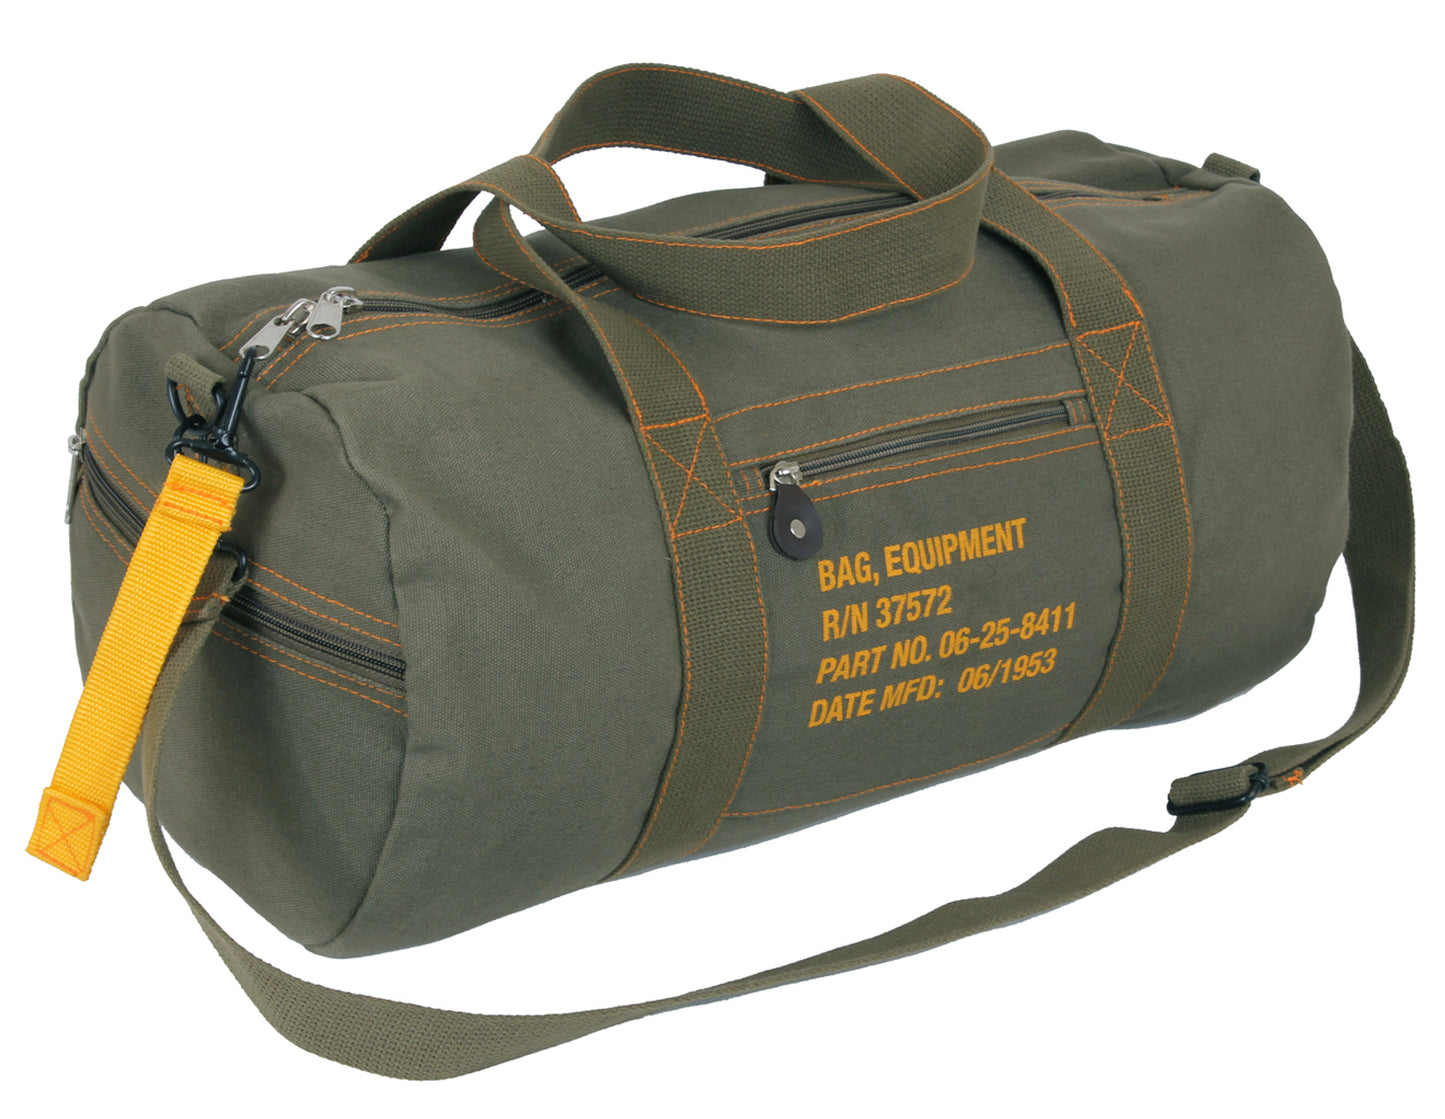 Olive Drab Green Cotton Canvas 19" Equipment Duffle Bag w/ Strap